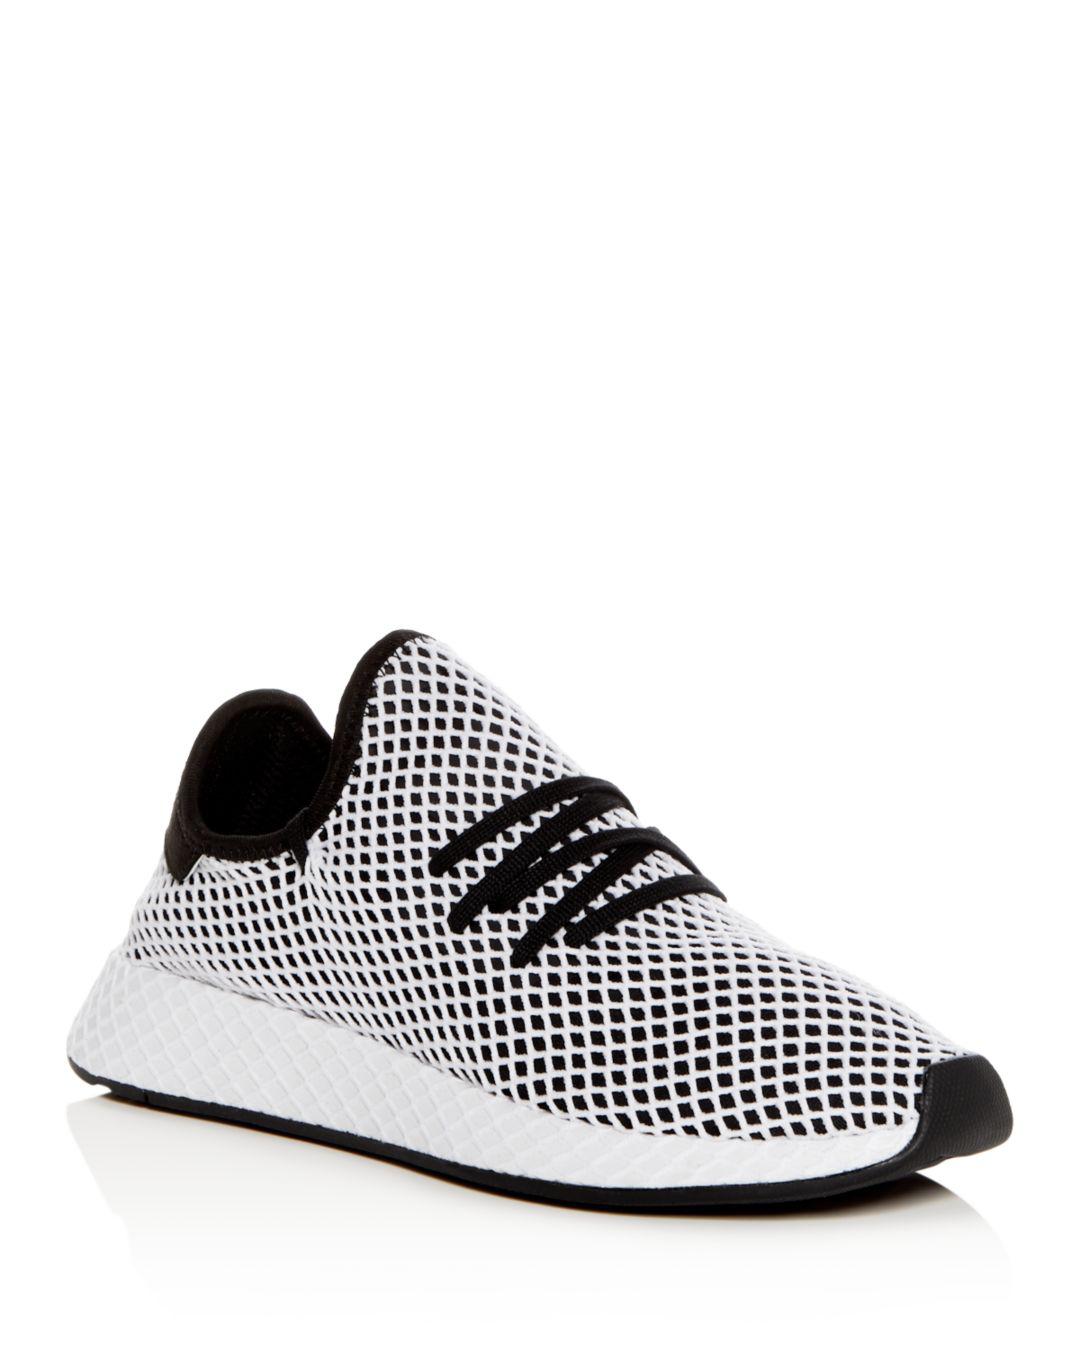 Buy Adidas Kids Boys Deerupt Runner Shoes Black White